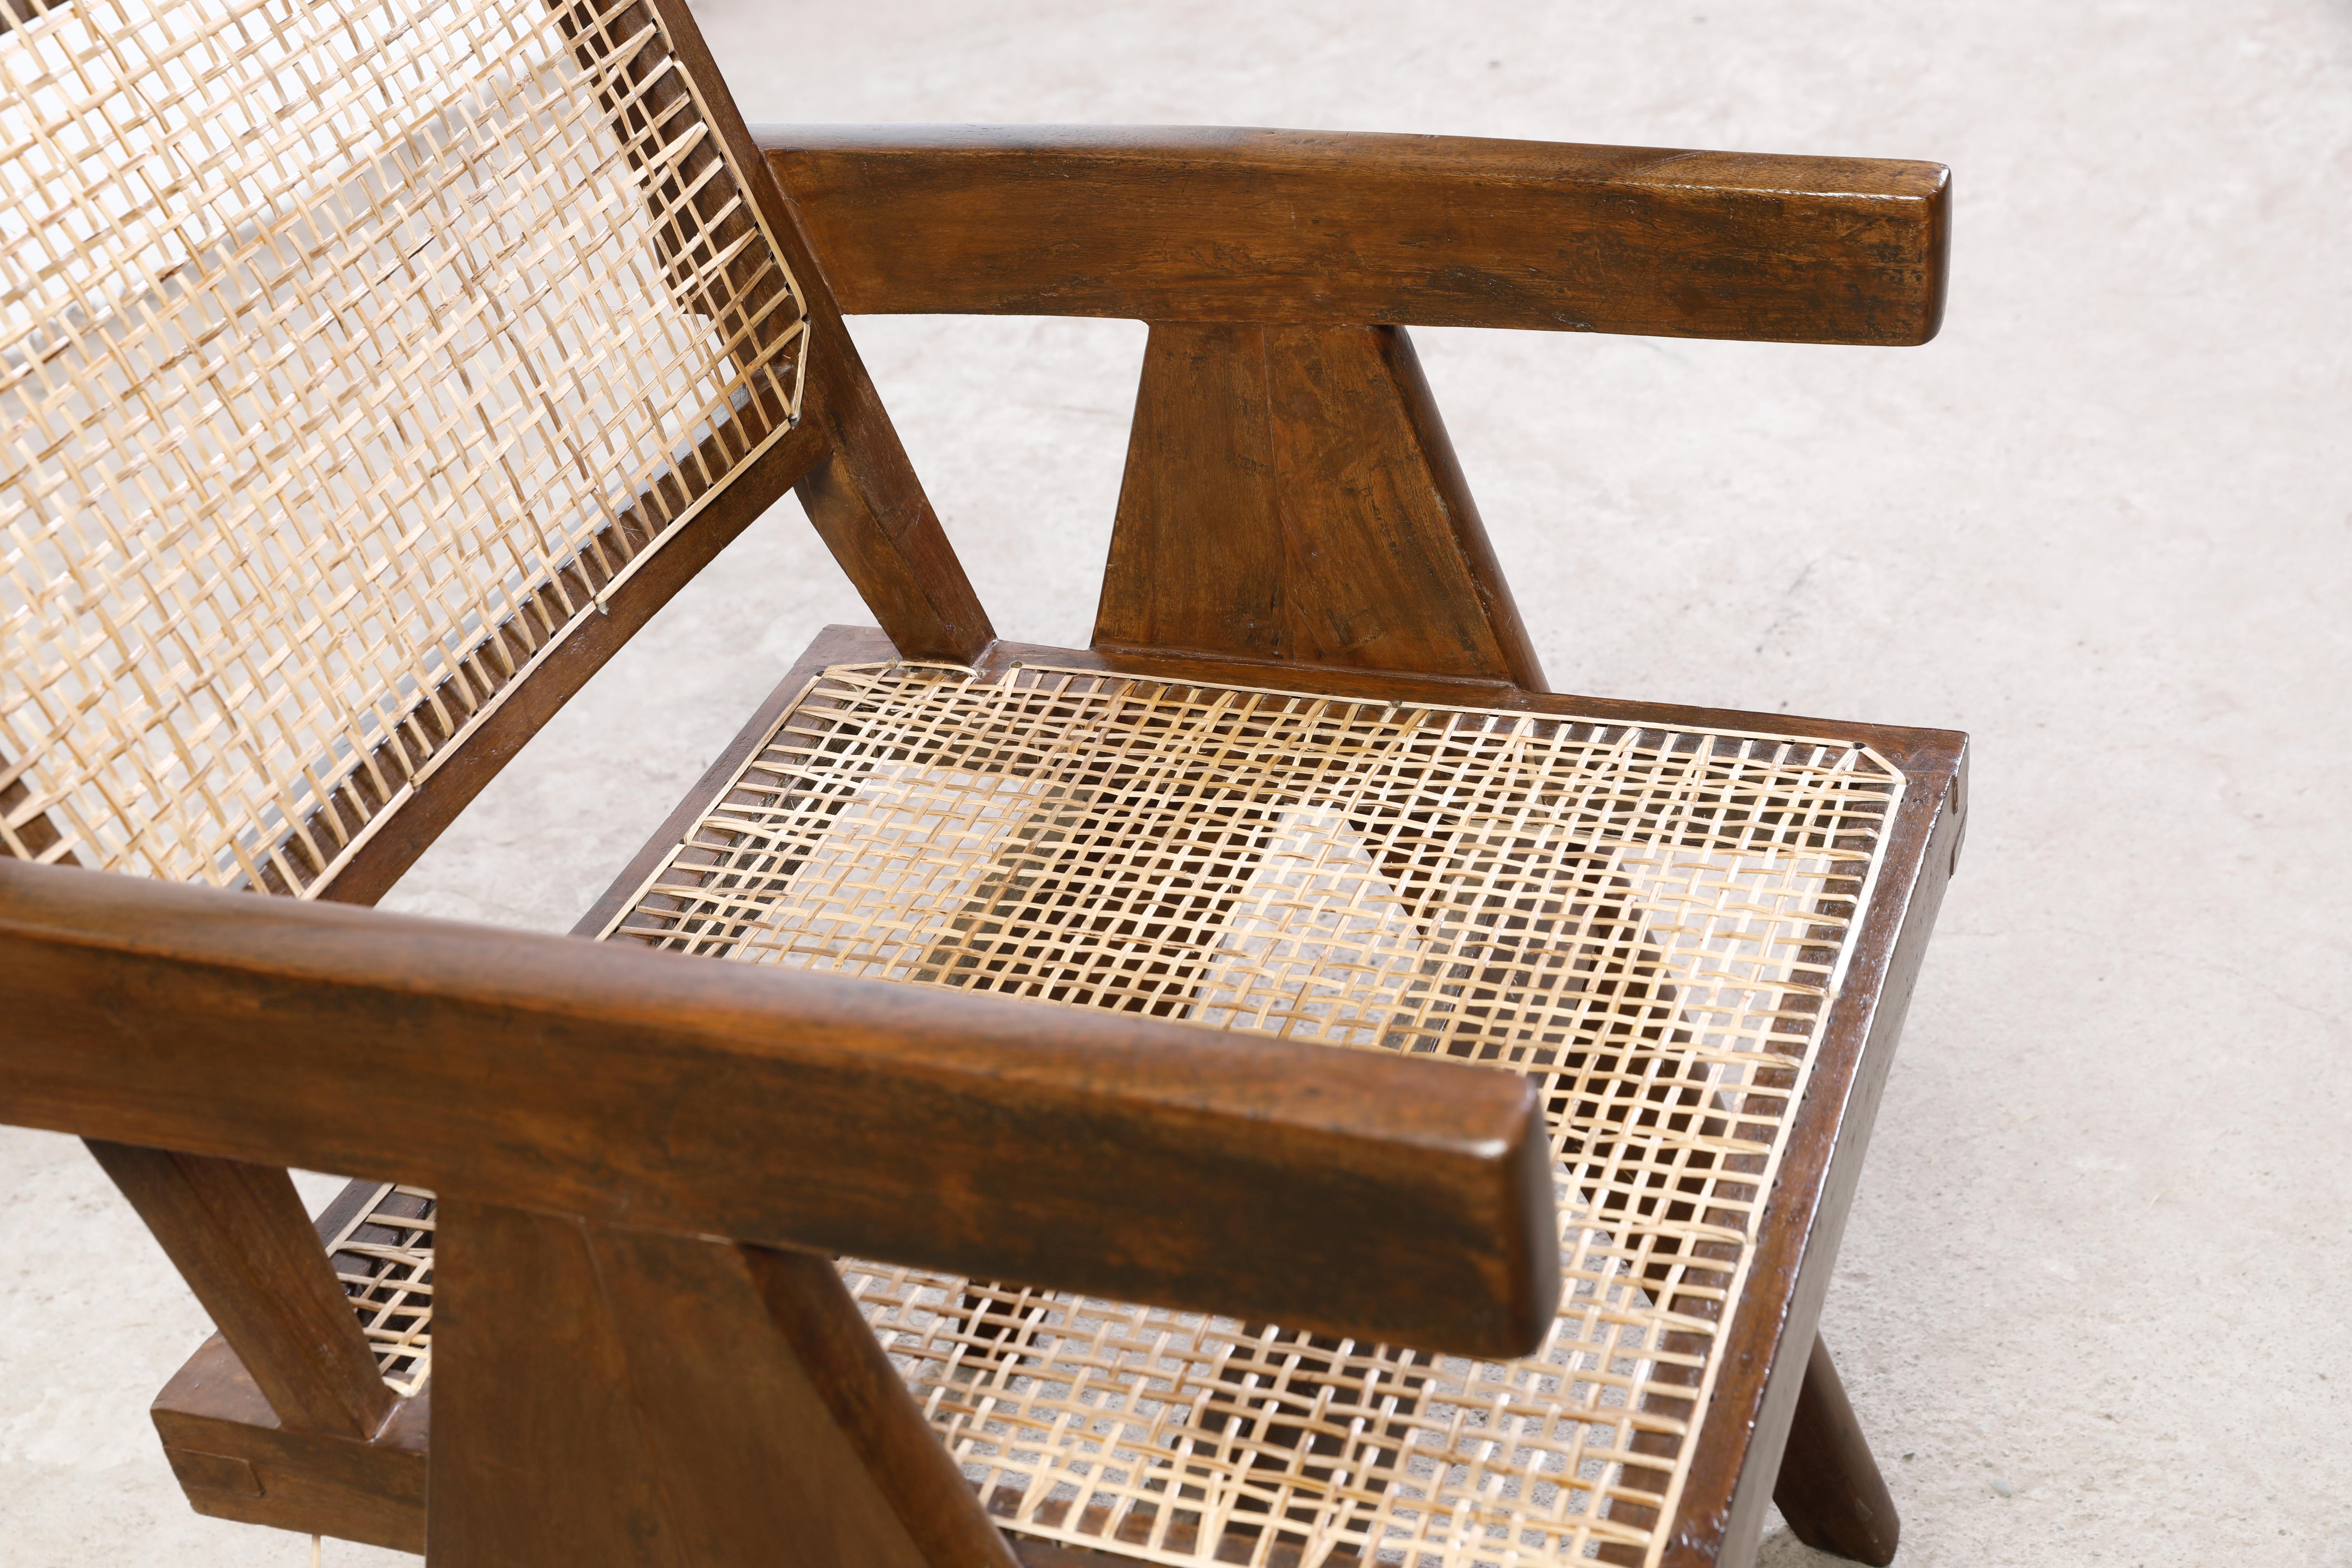 20th Century Pierre Jeanneret Office Cane Chair Authentic Mid-Century Modern Chandigarh